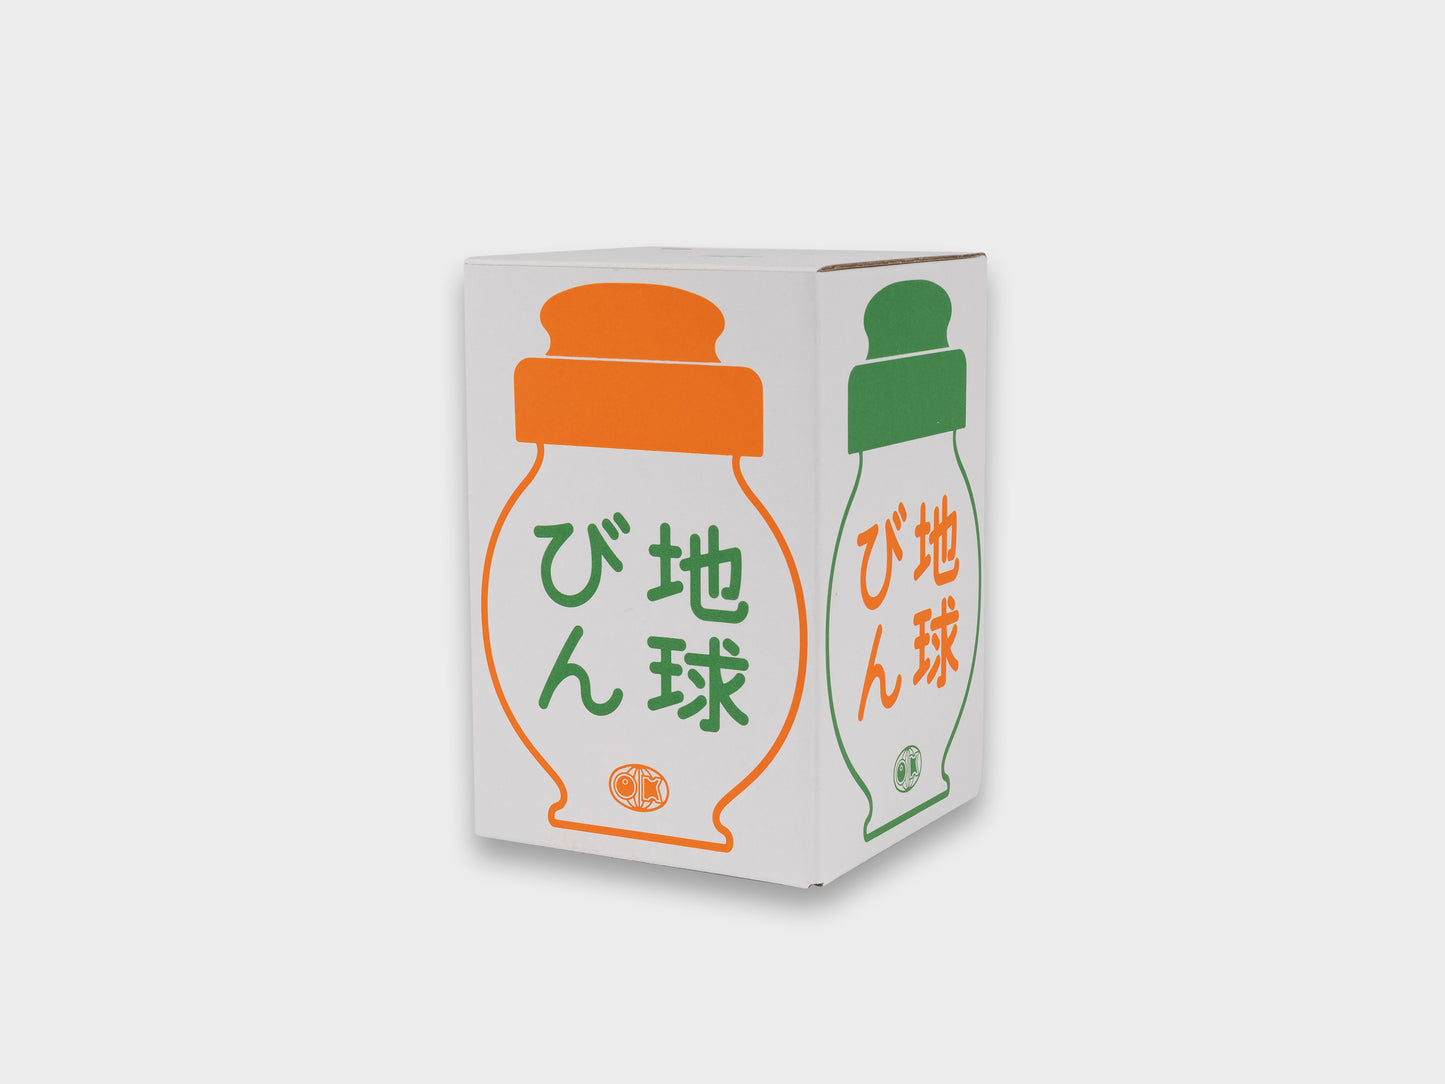 Okawa Glass Chikyu Bottle Green